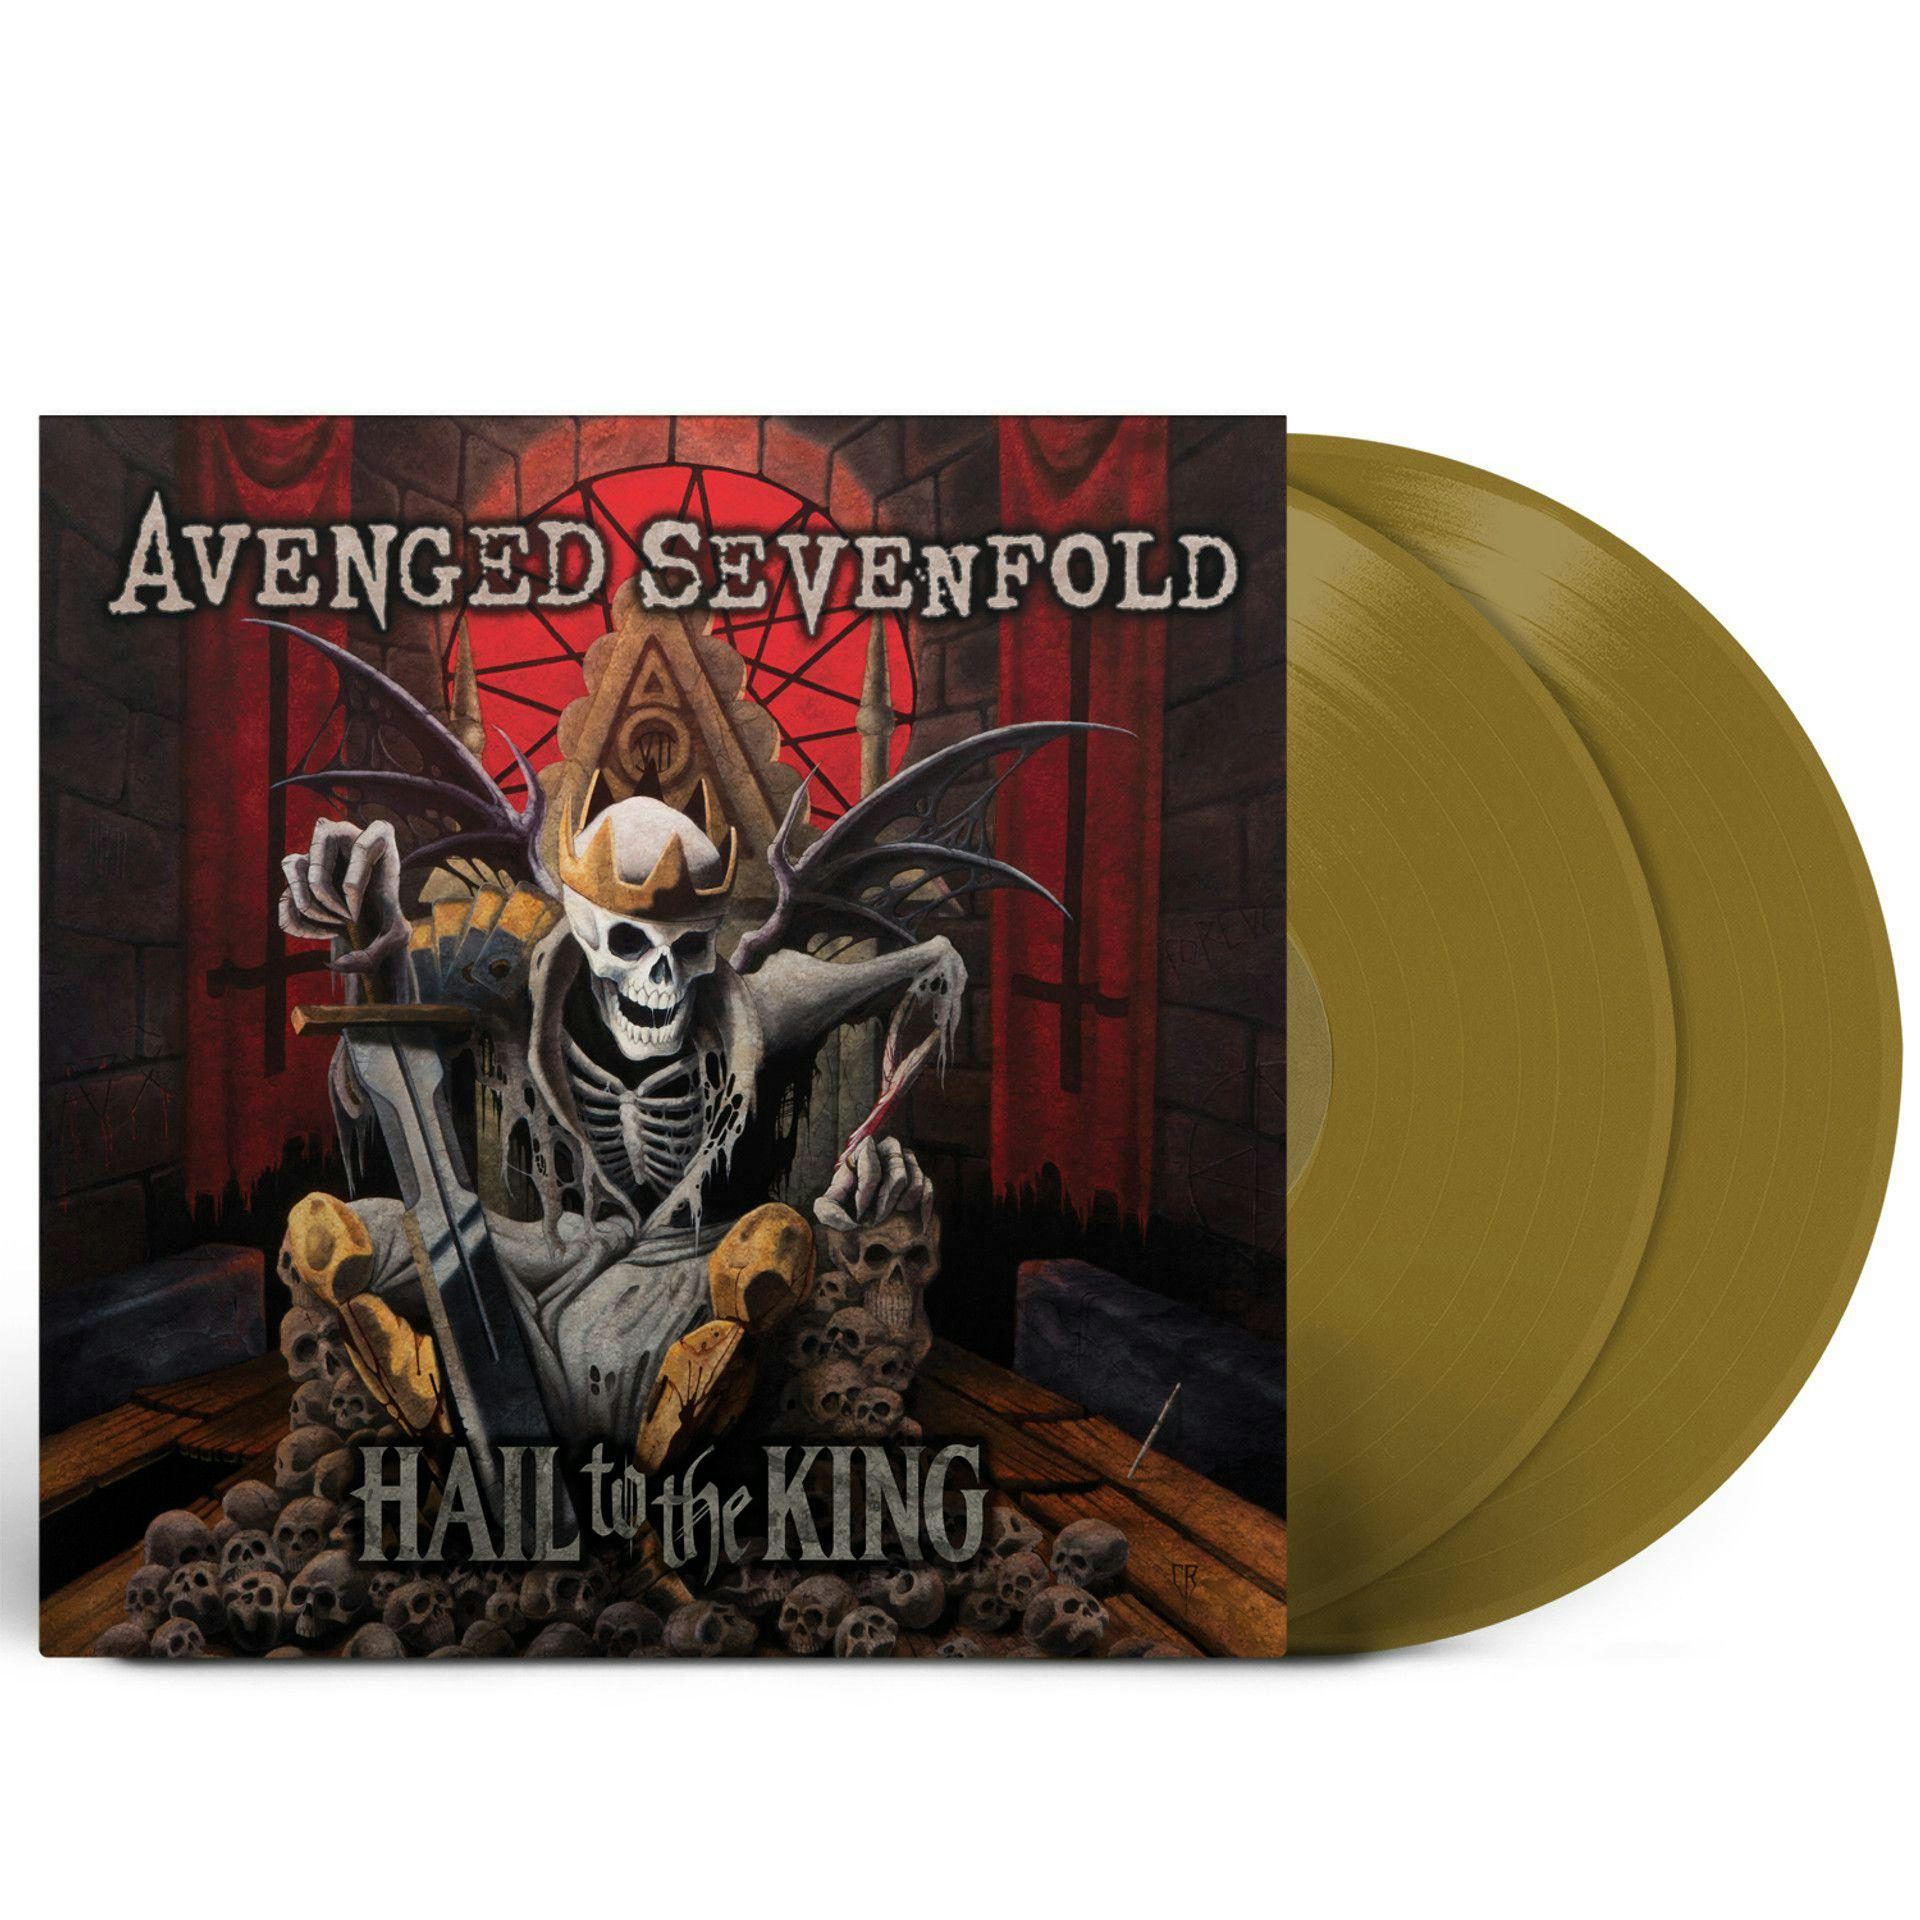 Avenged Sevenfold - Nightmare - Vinyl LP - 2010 - US - Original | HHV